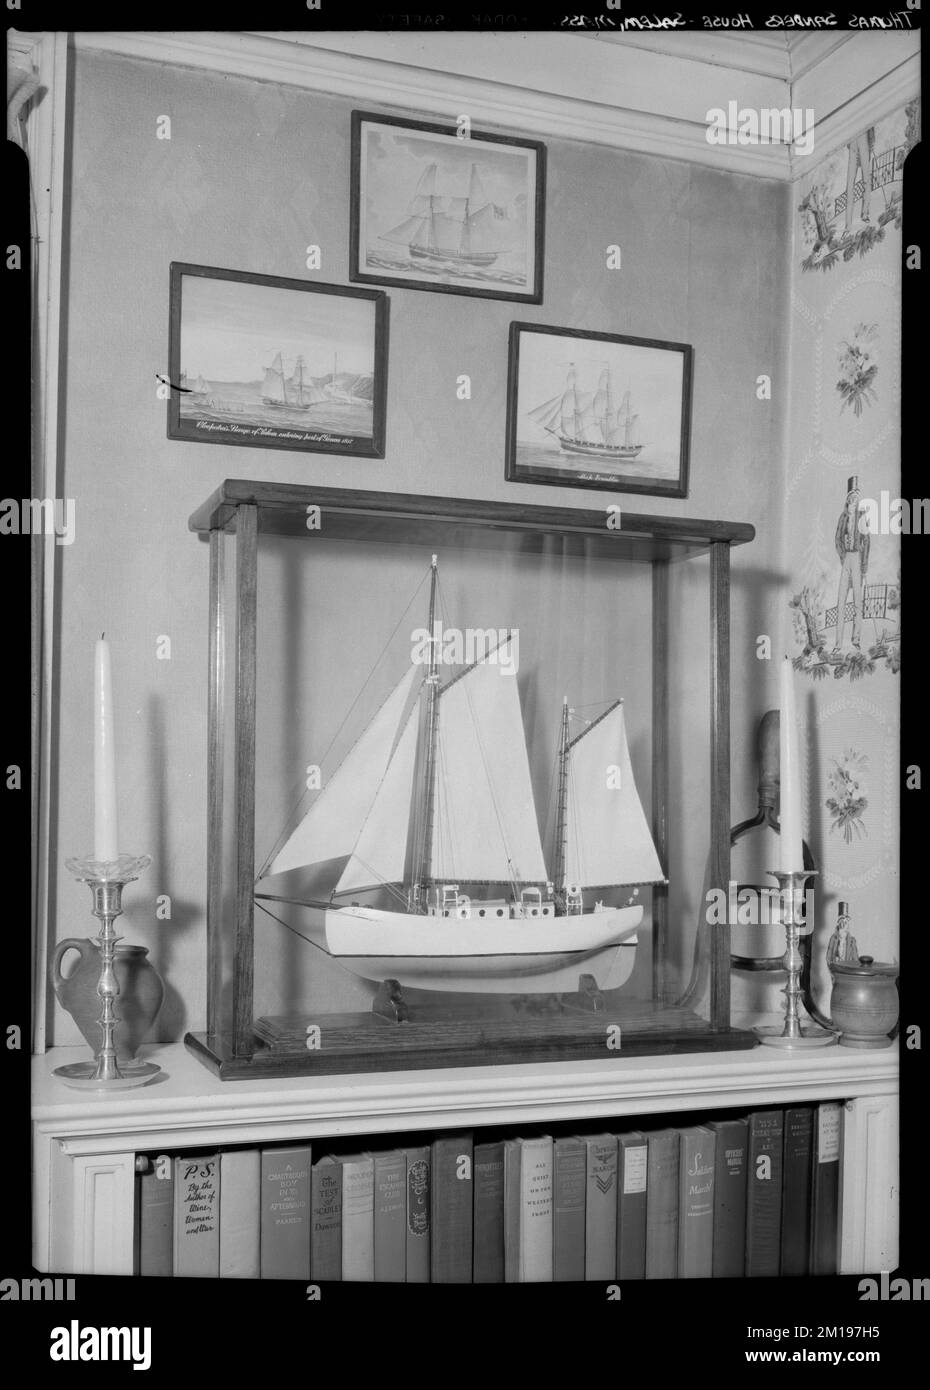 Thomas Sanders House, ships models, Salem, MA, interior , Model ships. Samuel Chamberlain Photograph Negatives Collection Stock Photo